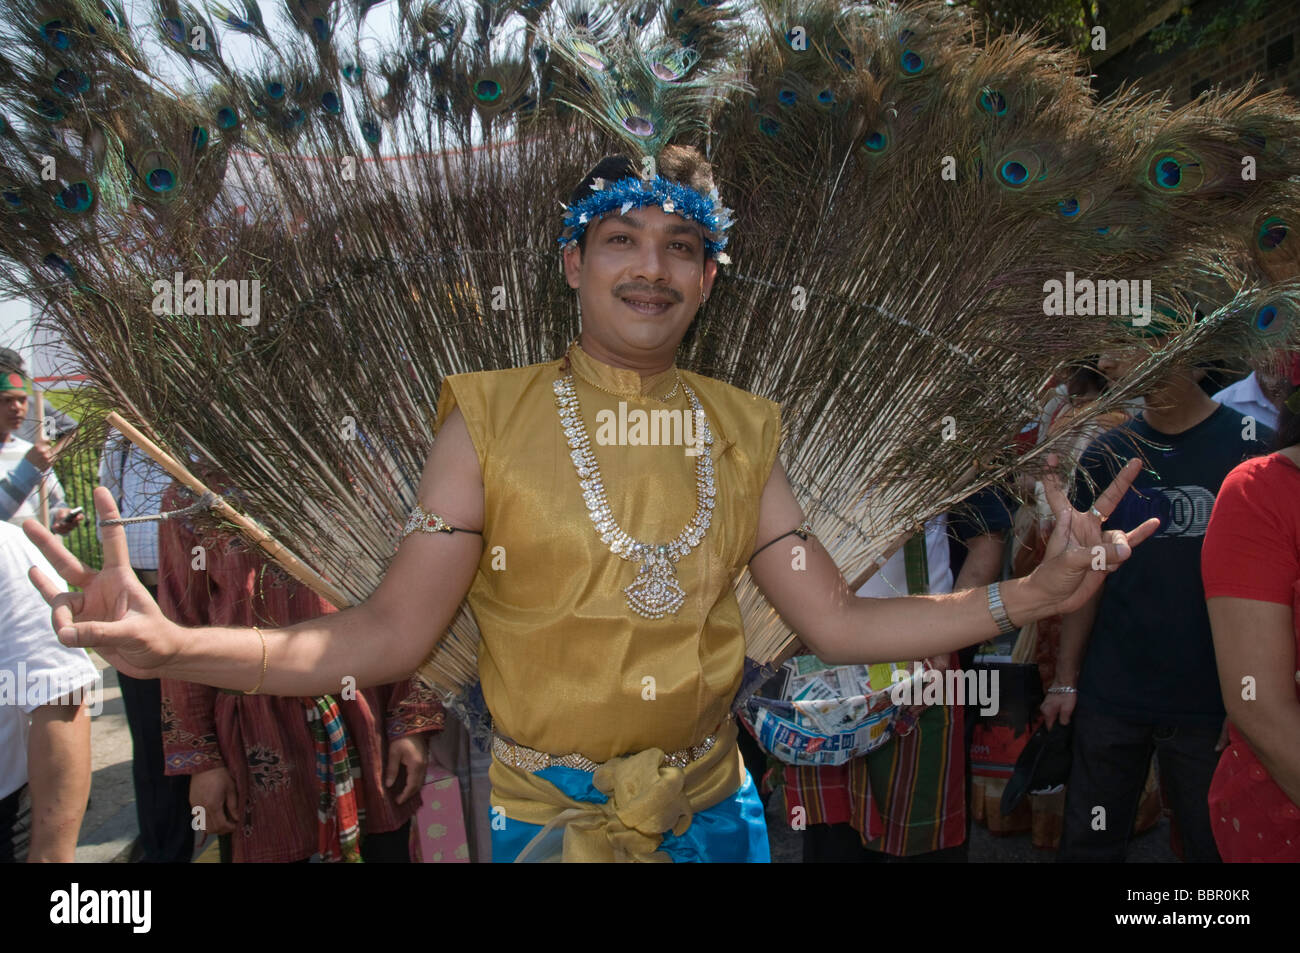 Man with peacock feather costume inBaishakhi Mela Procession celebrating  the Bangladesh New Year in London's Brick Lane Stock Photo - Alamy